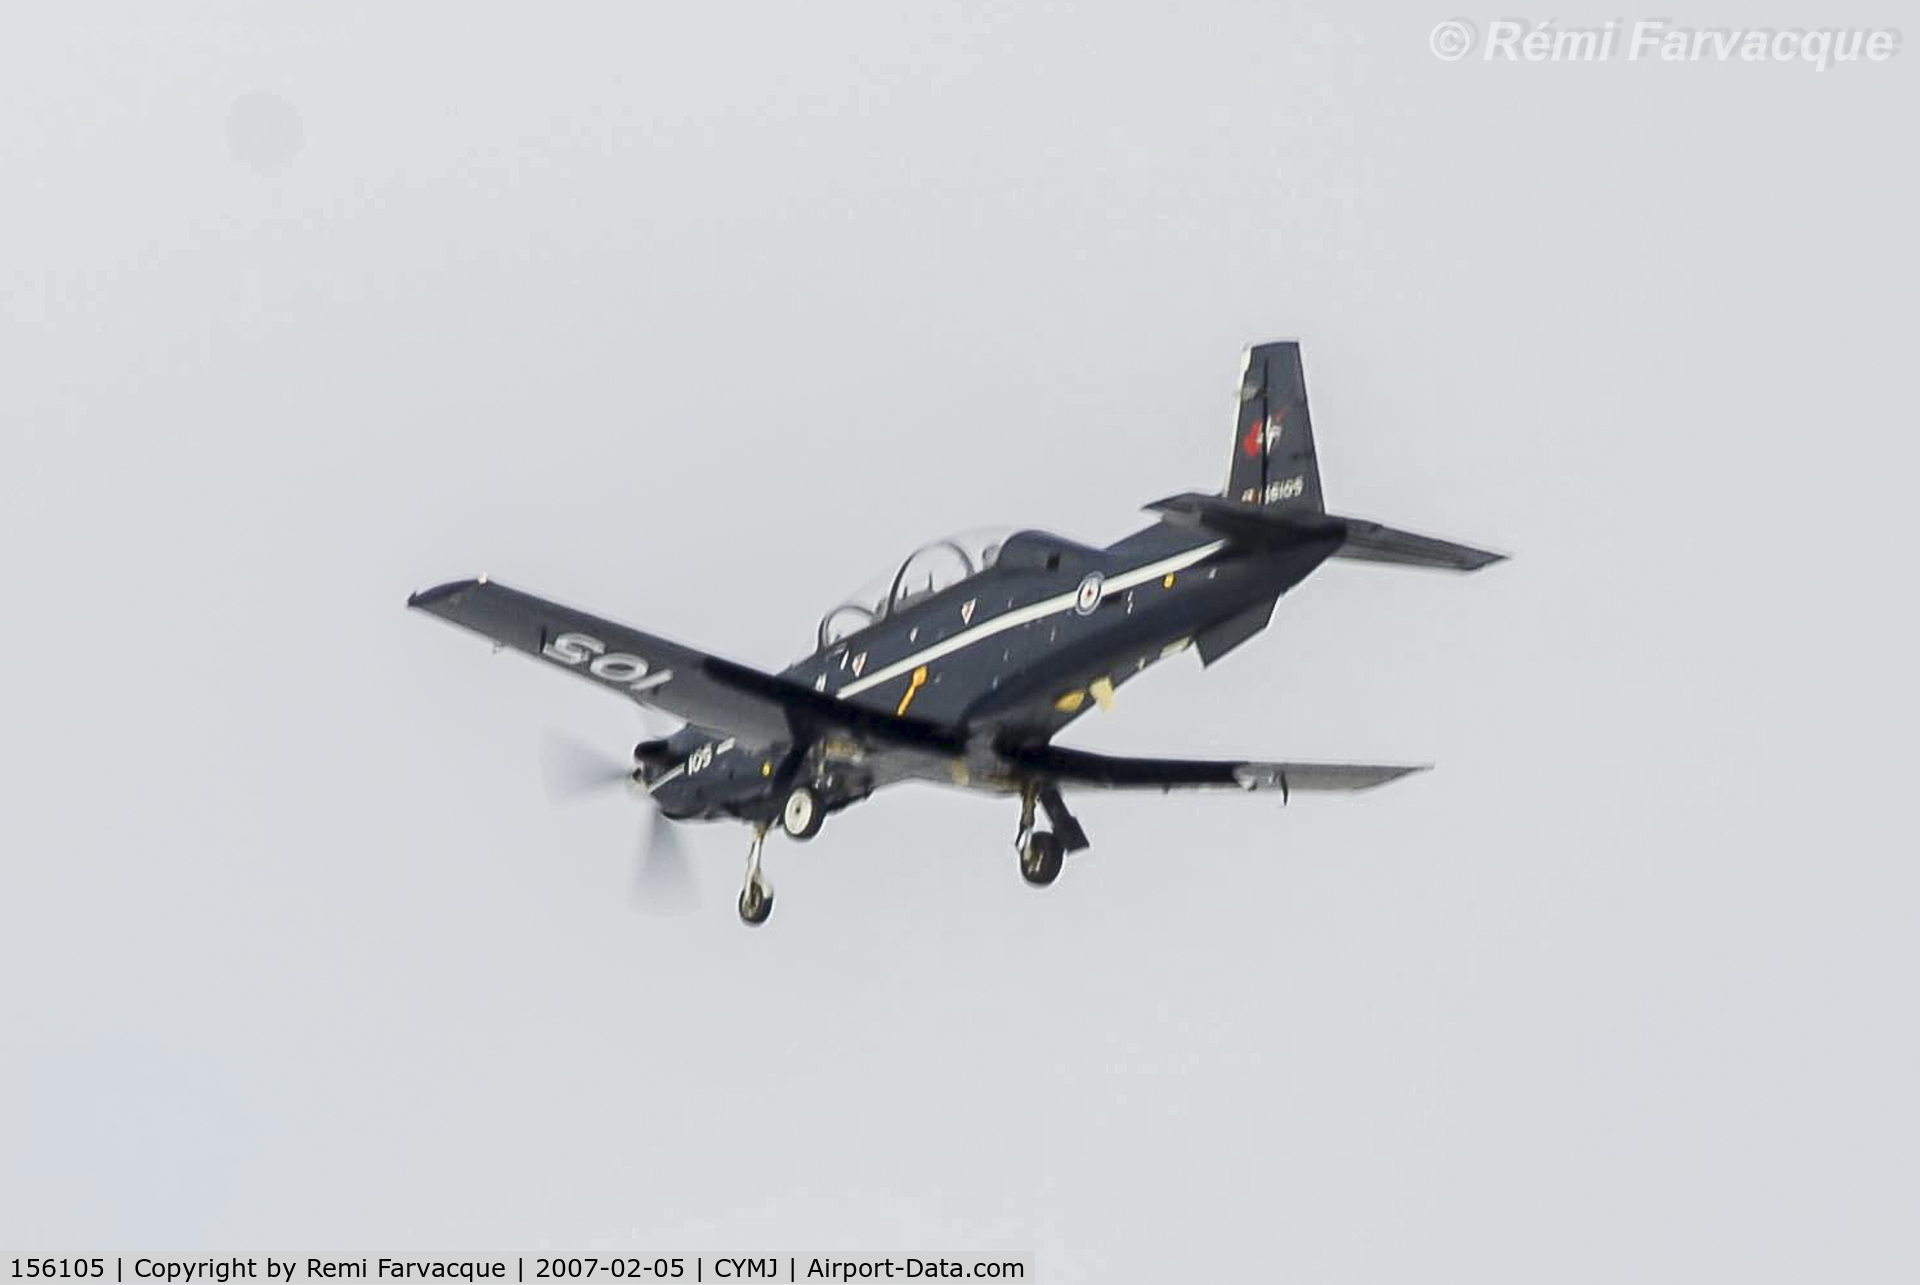 156105, Raytheon CT-156 Harvard II C/N PF-05, Flying northwest over Highway just south of Moose Jaw.